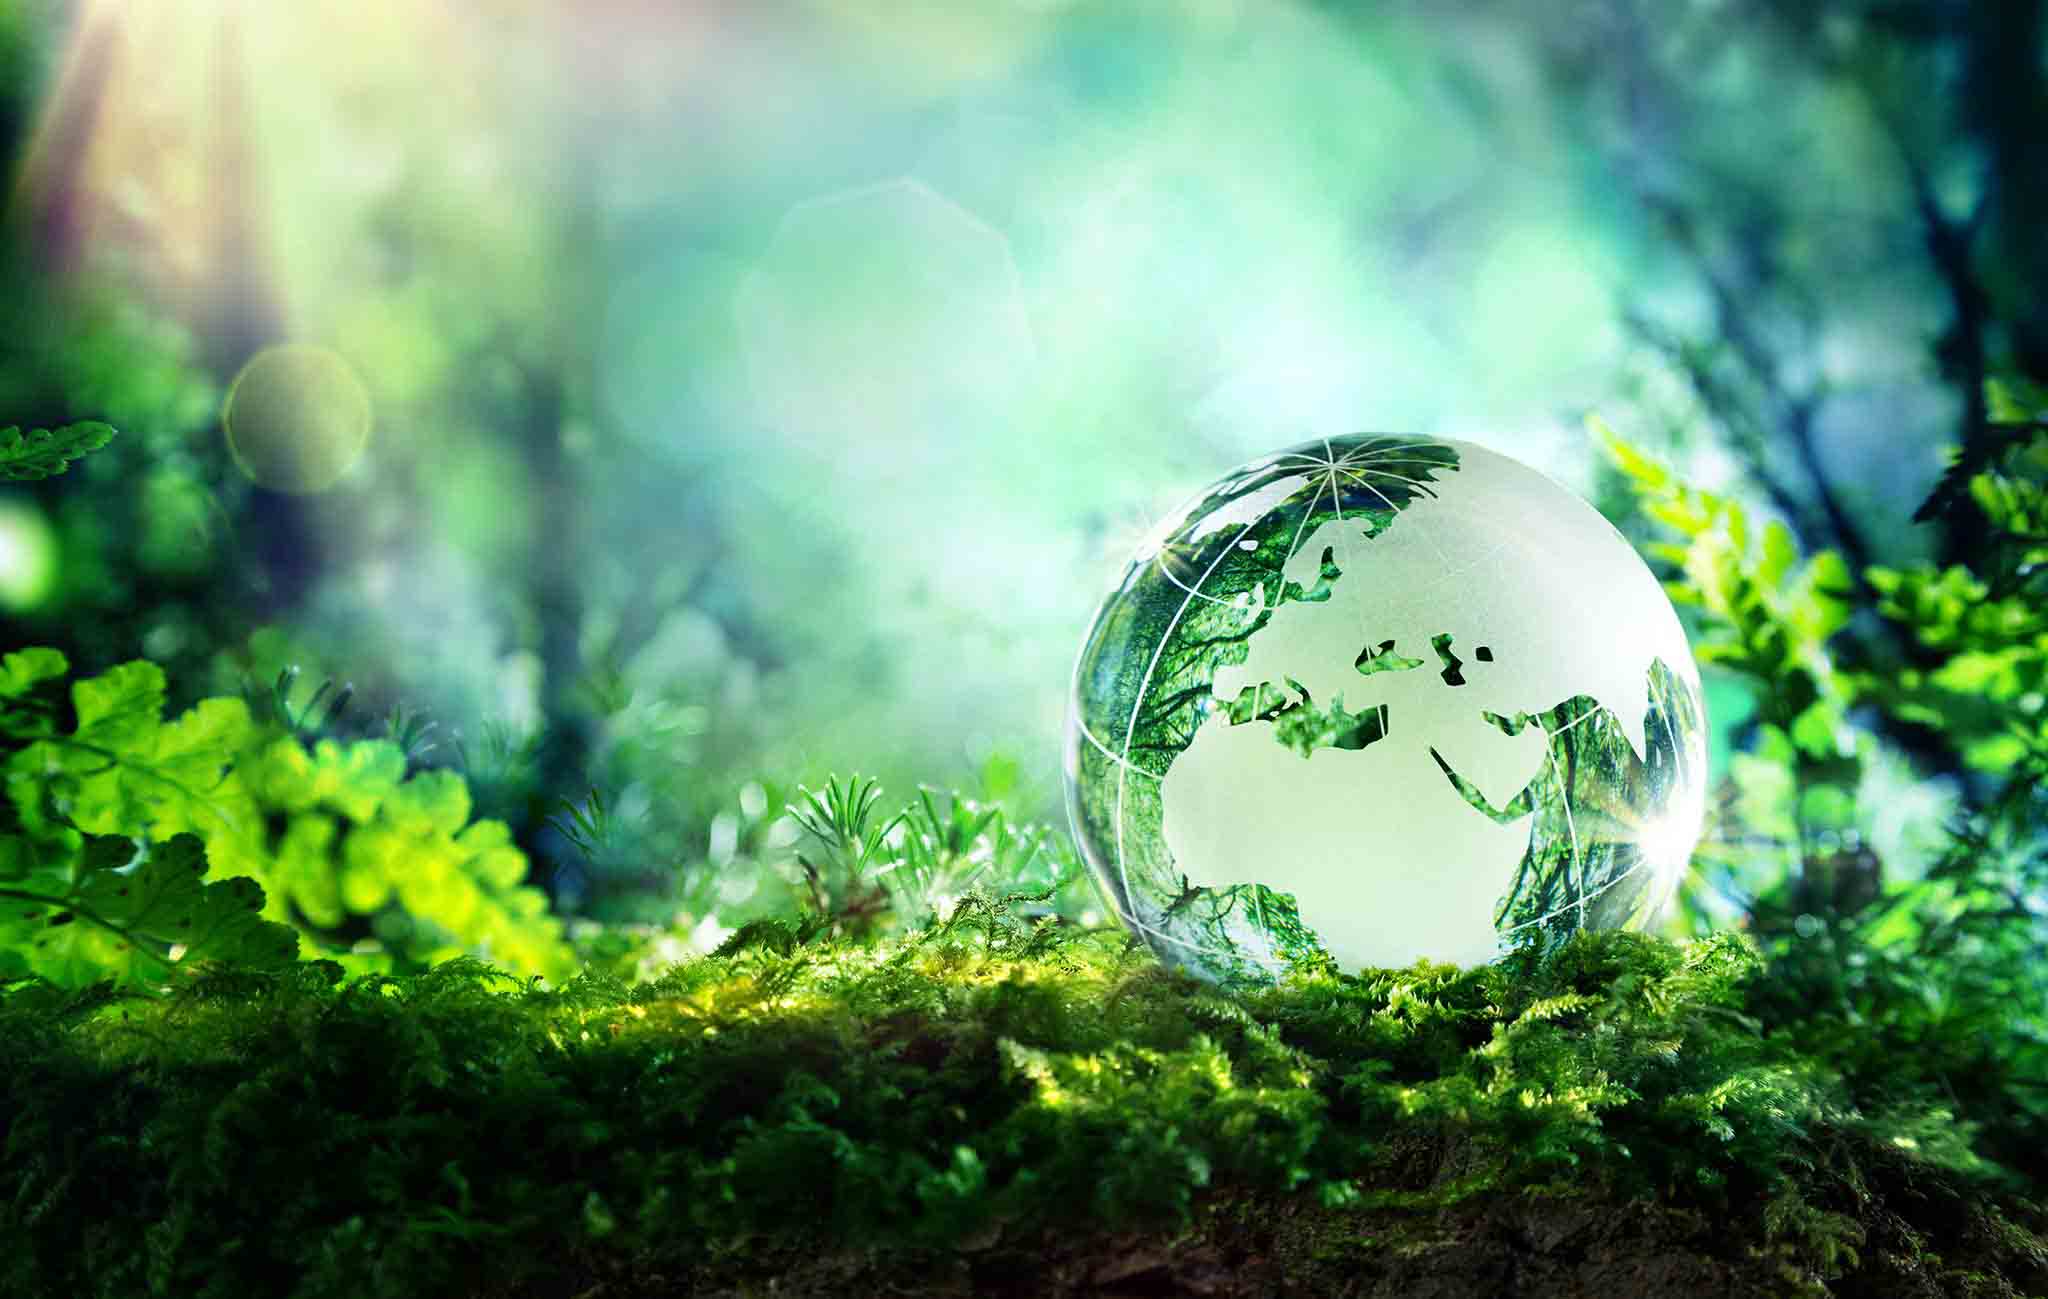 Environmental Sustainability and Human Values